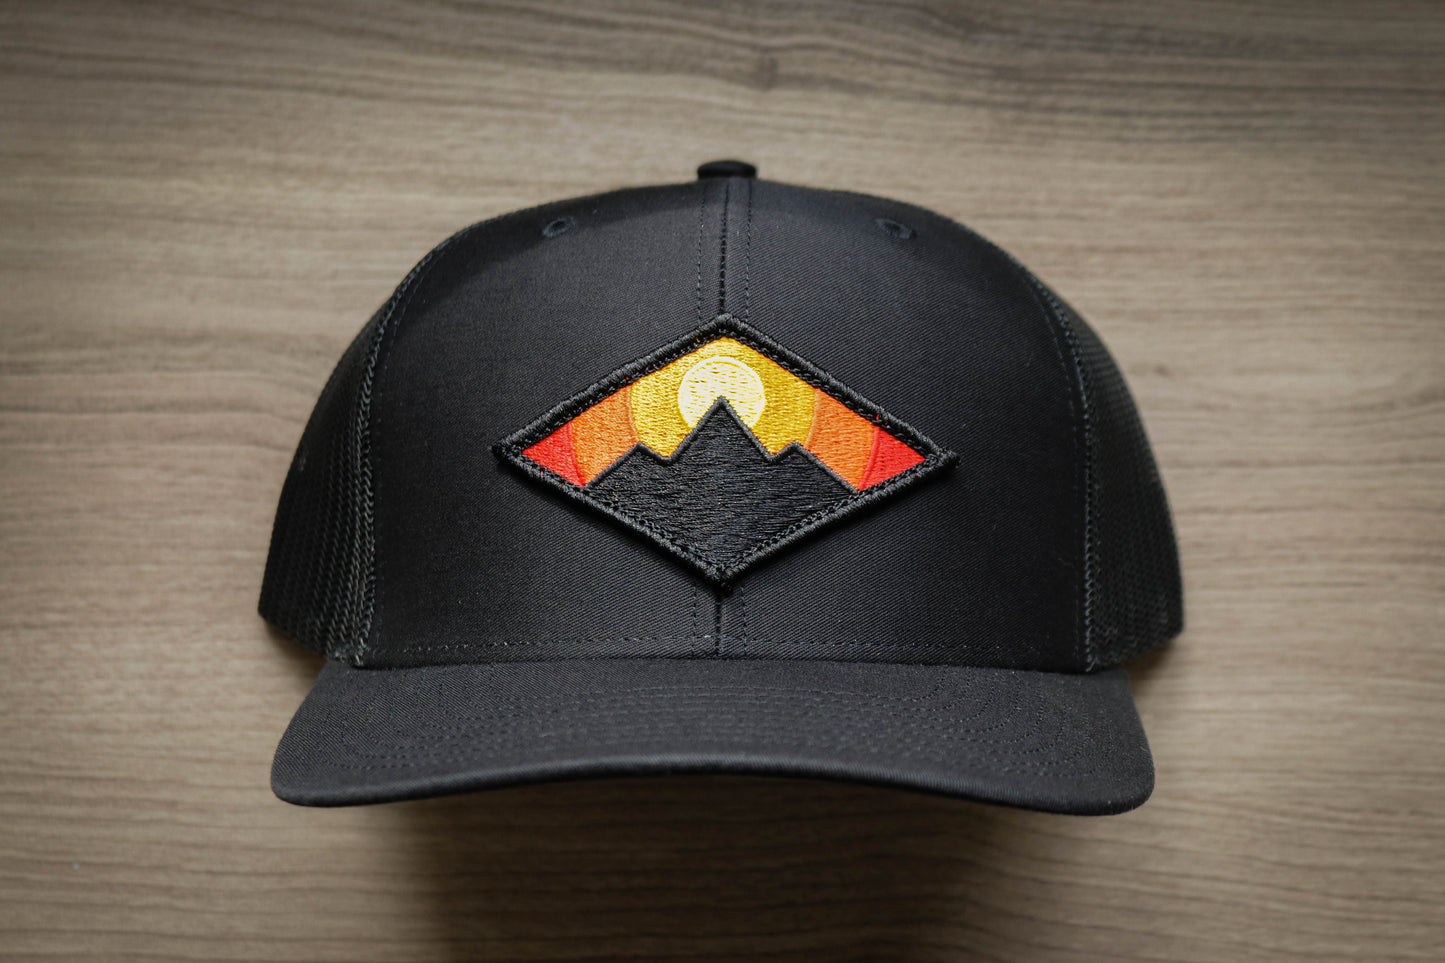 mountain trucker hat